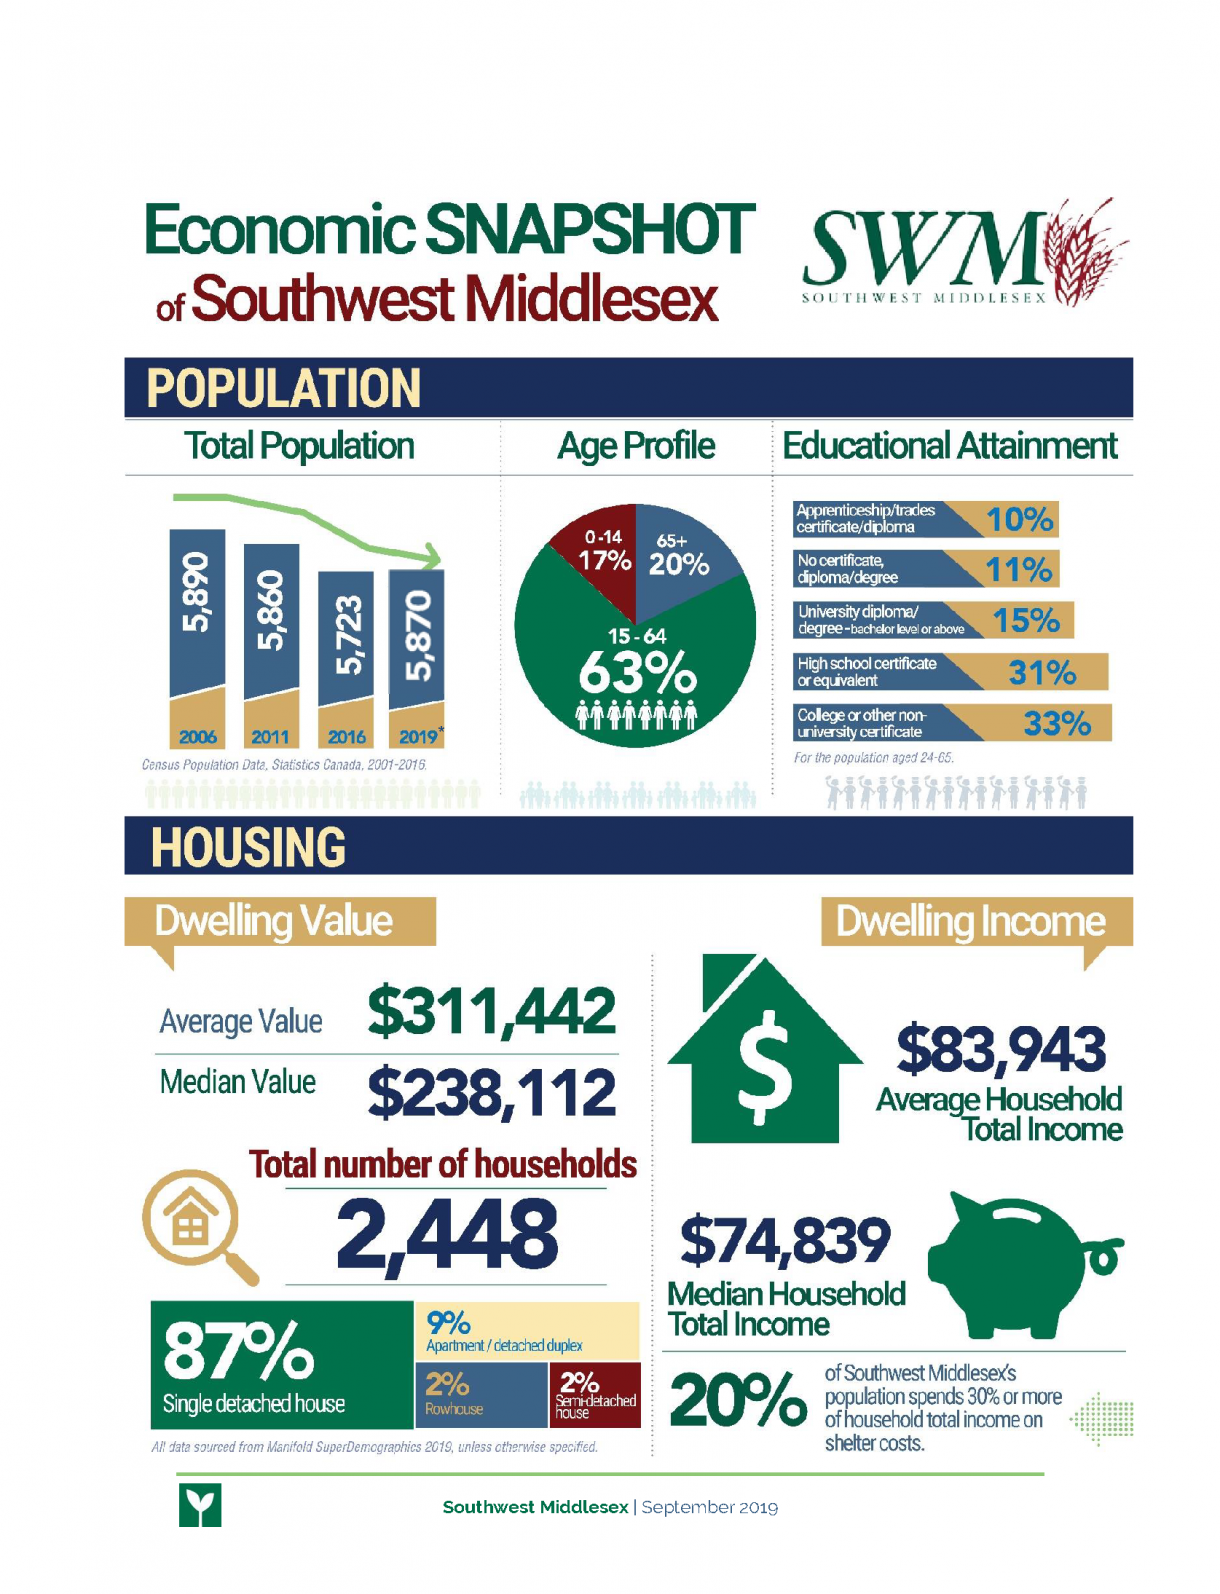 Economic Snapshot - Population and Housing in SWM